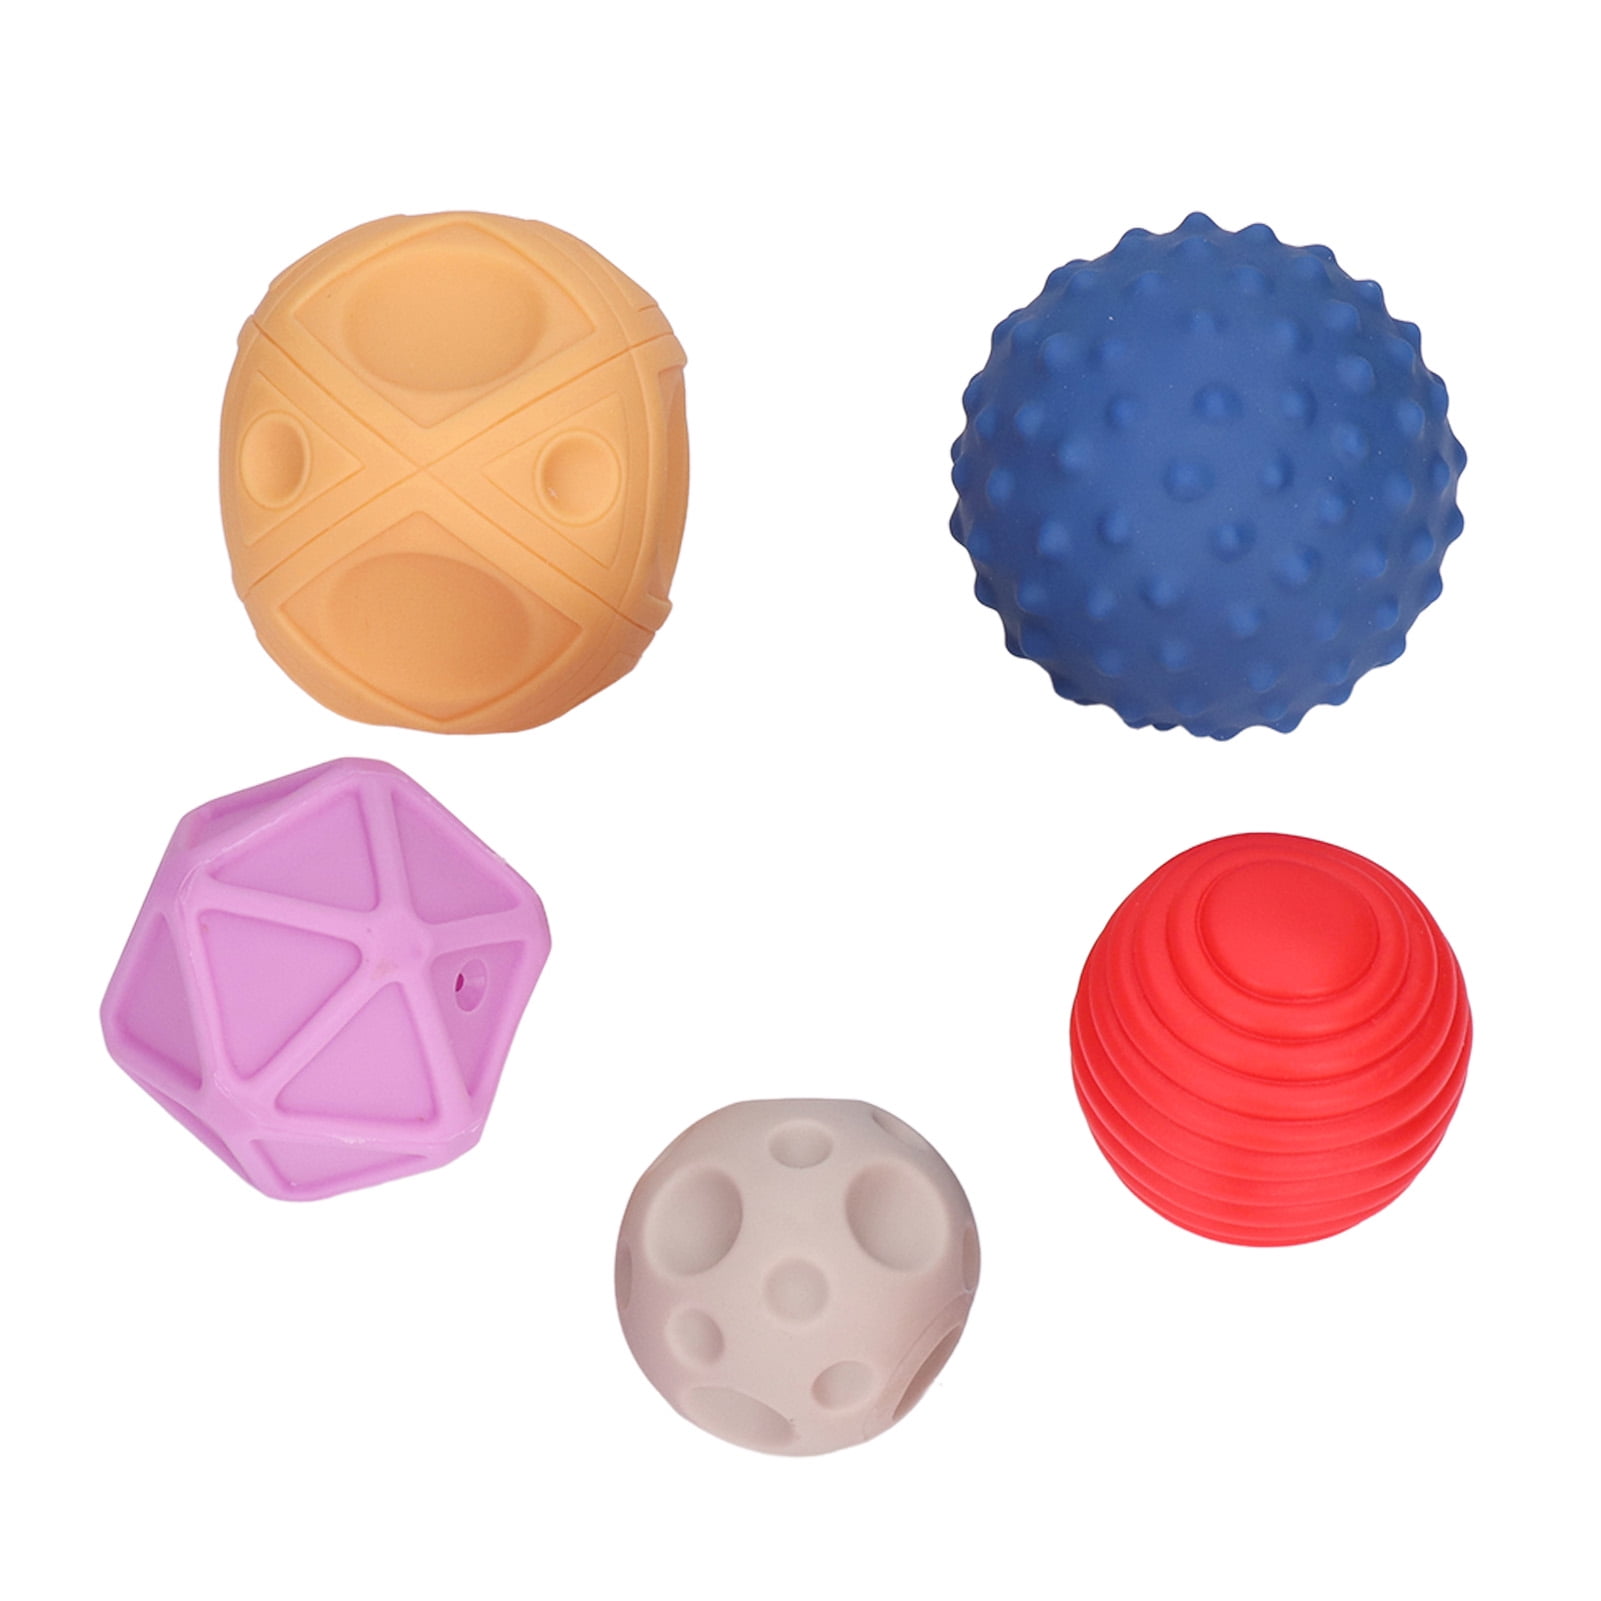 6 Pcs Baby Soft Massage Sensory Development Educational Puzzle Ball Sound Toys 